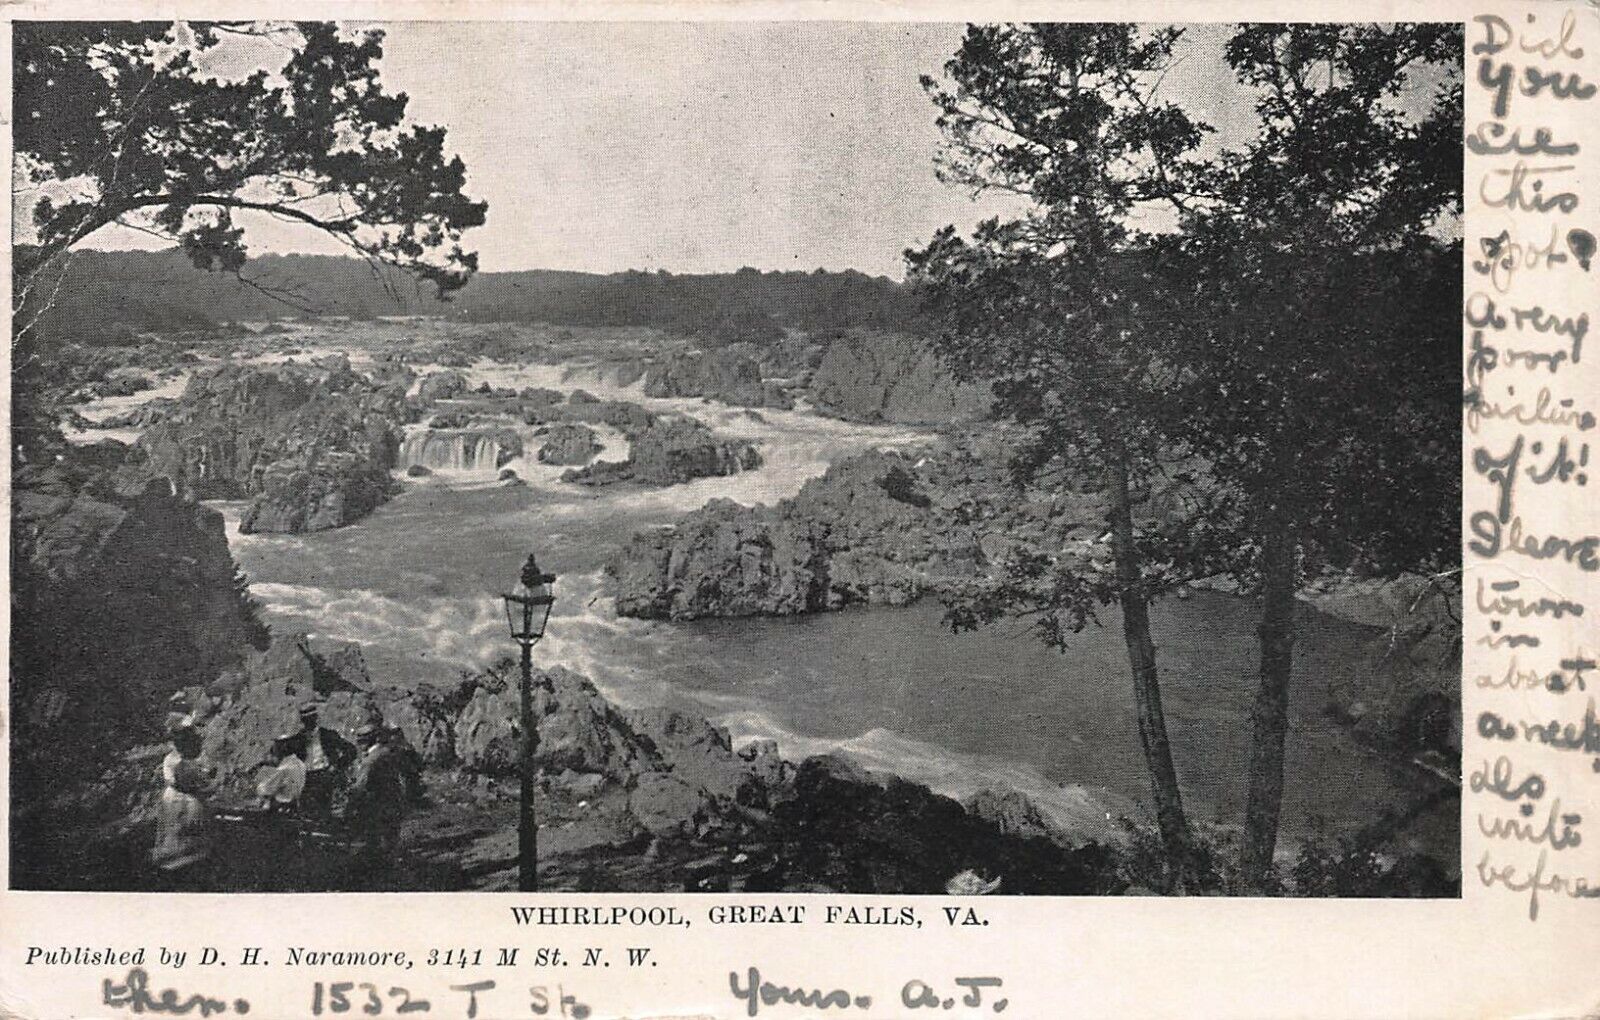 Whirlpool, Great Falls, Virginia, Early Postcard, Used in 1907